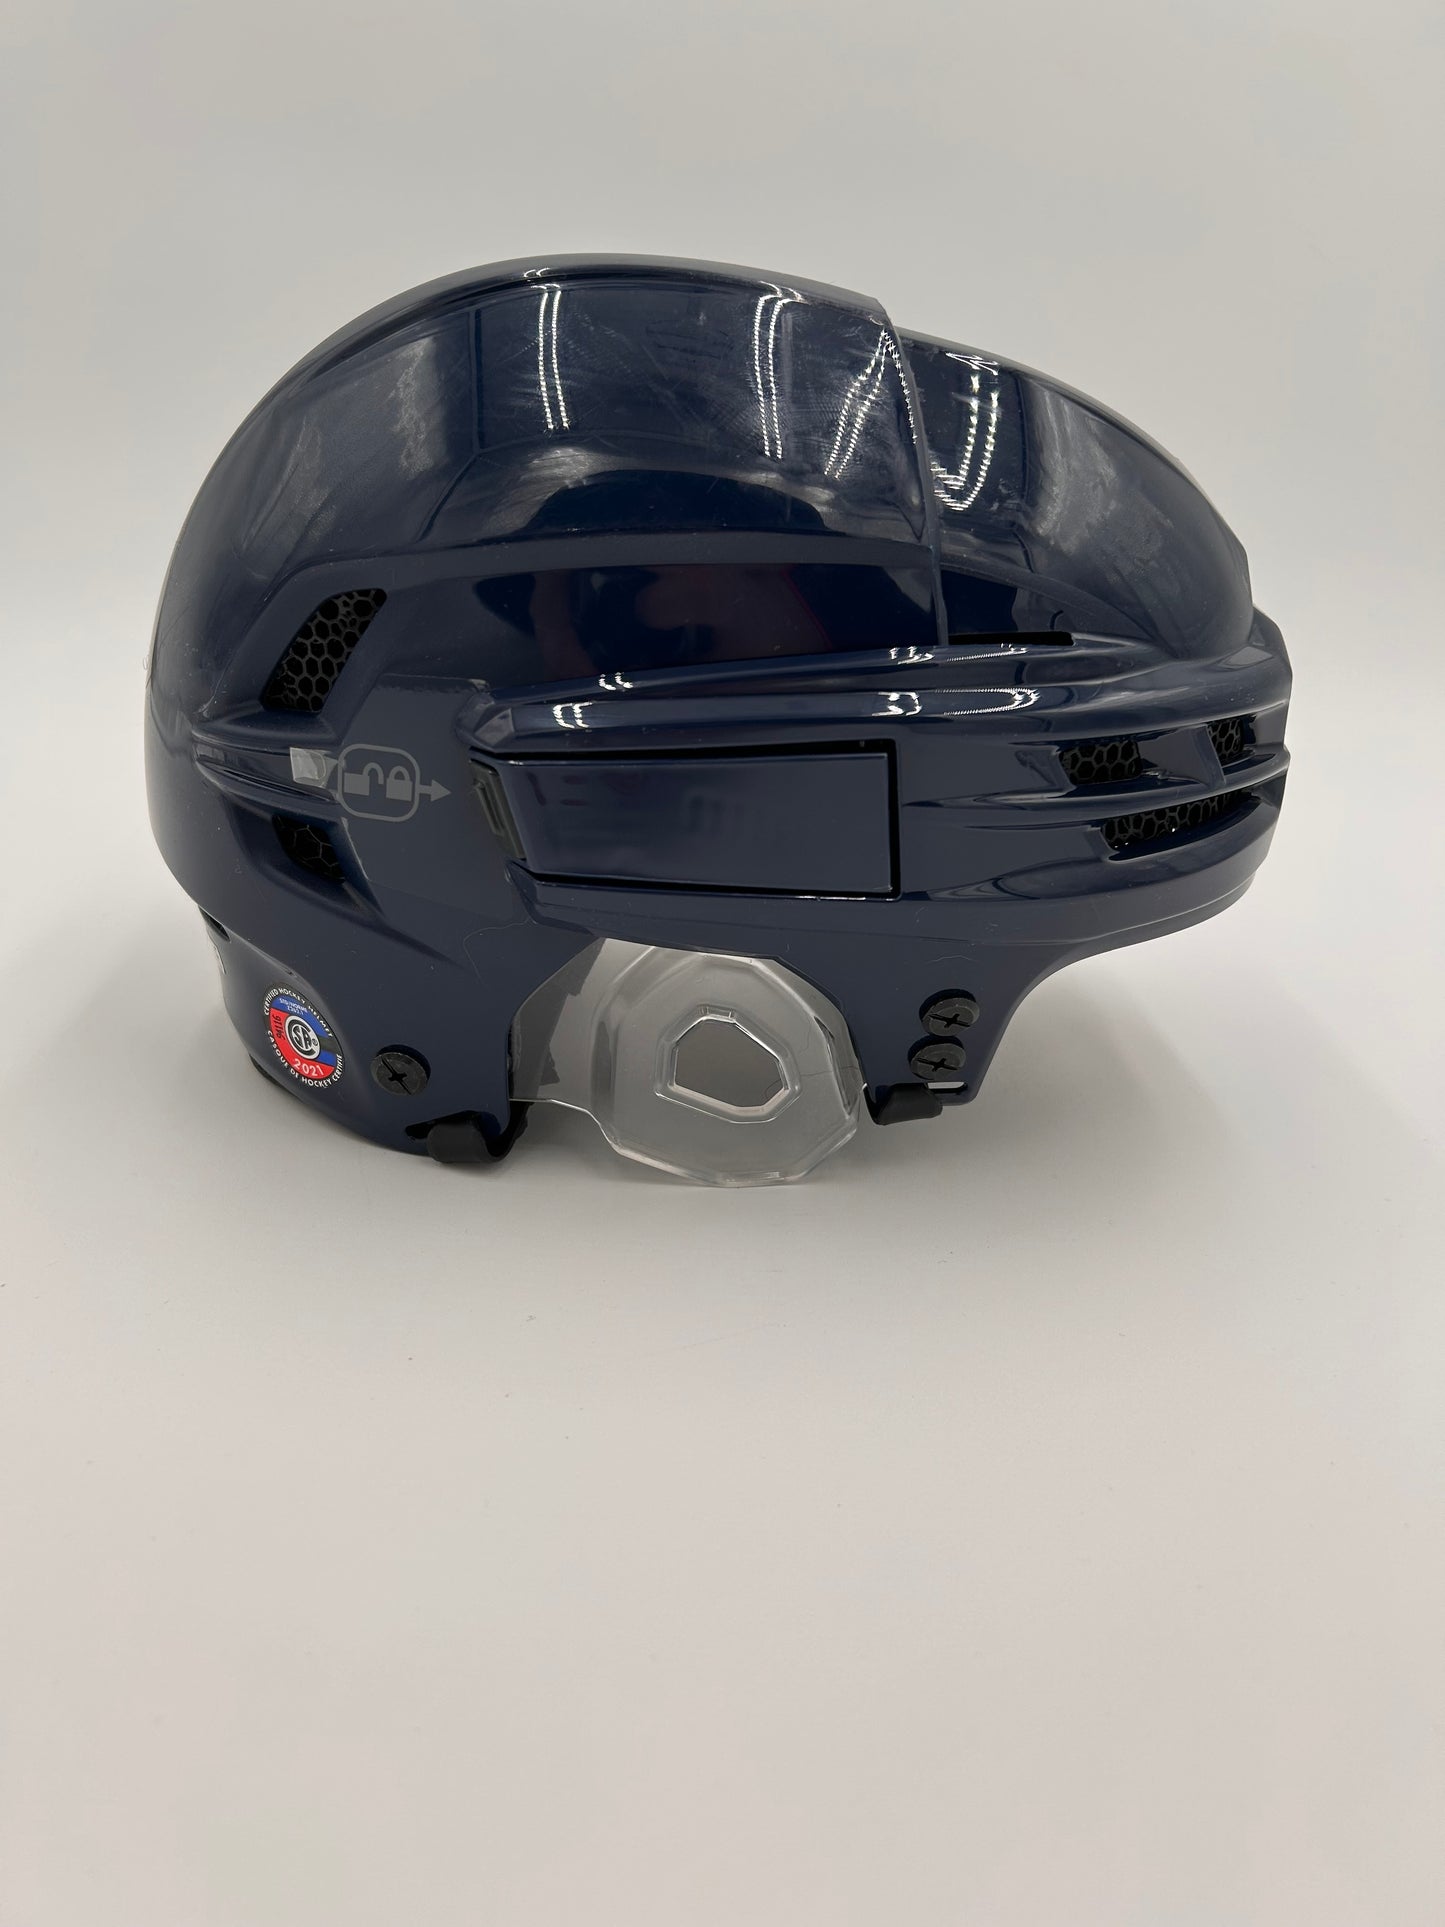 New Colorado Avalanche Prostock CCM Tacks X Total Custom “Navy” Helmet